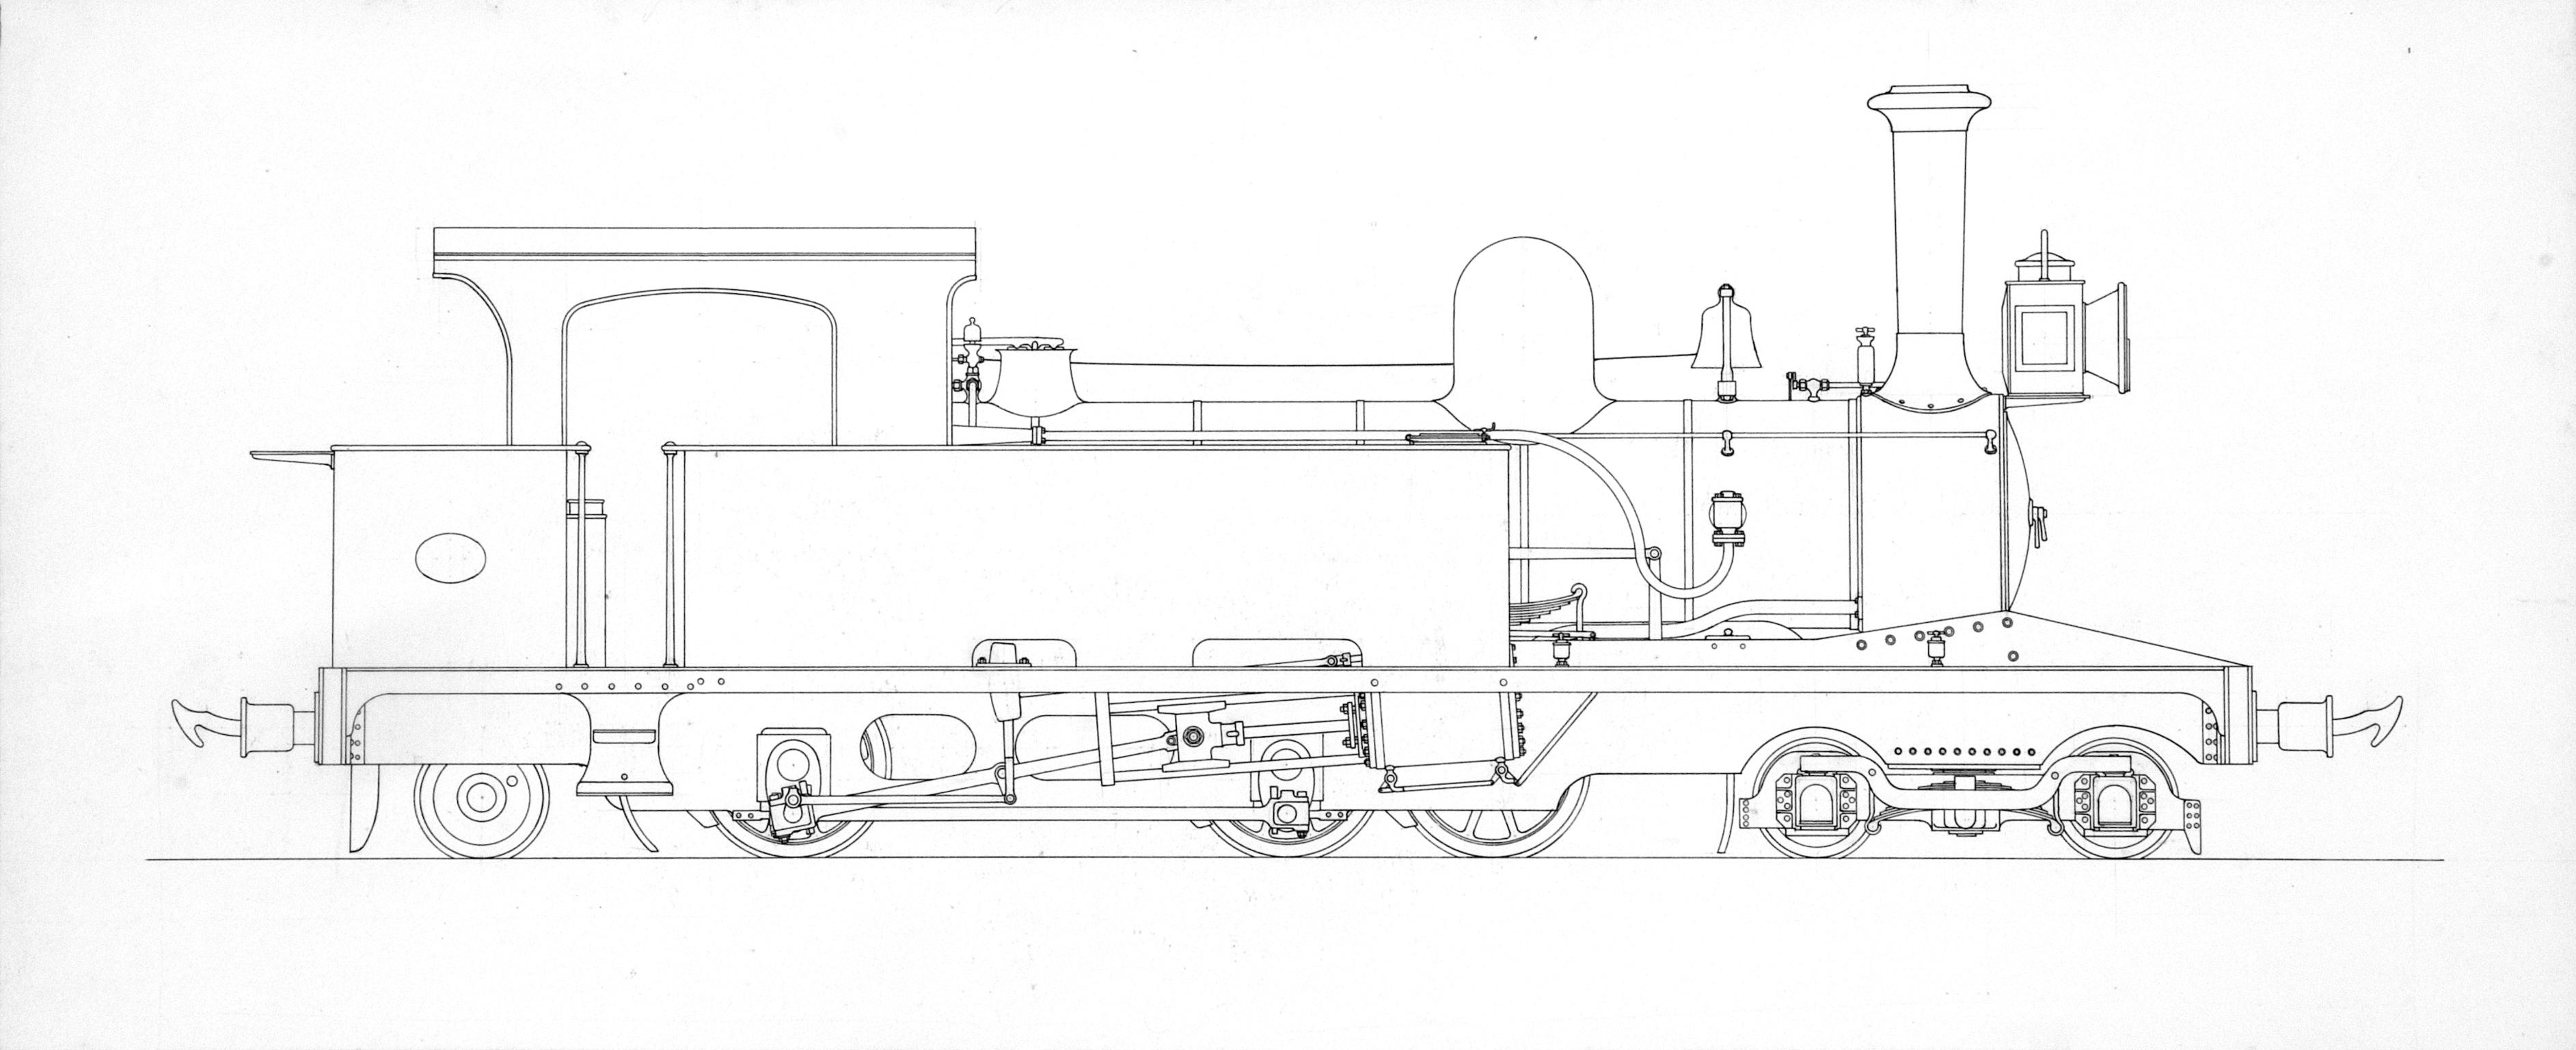 Steam locomotive (drawing)